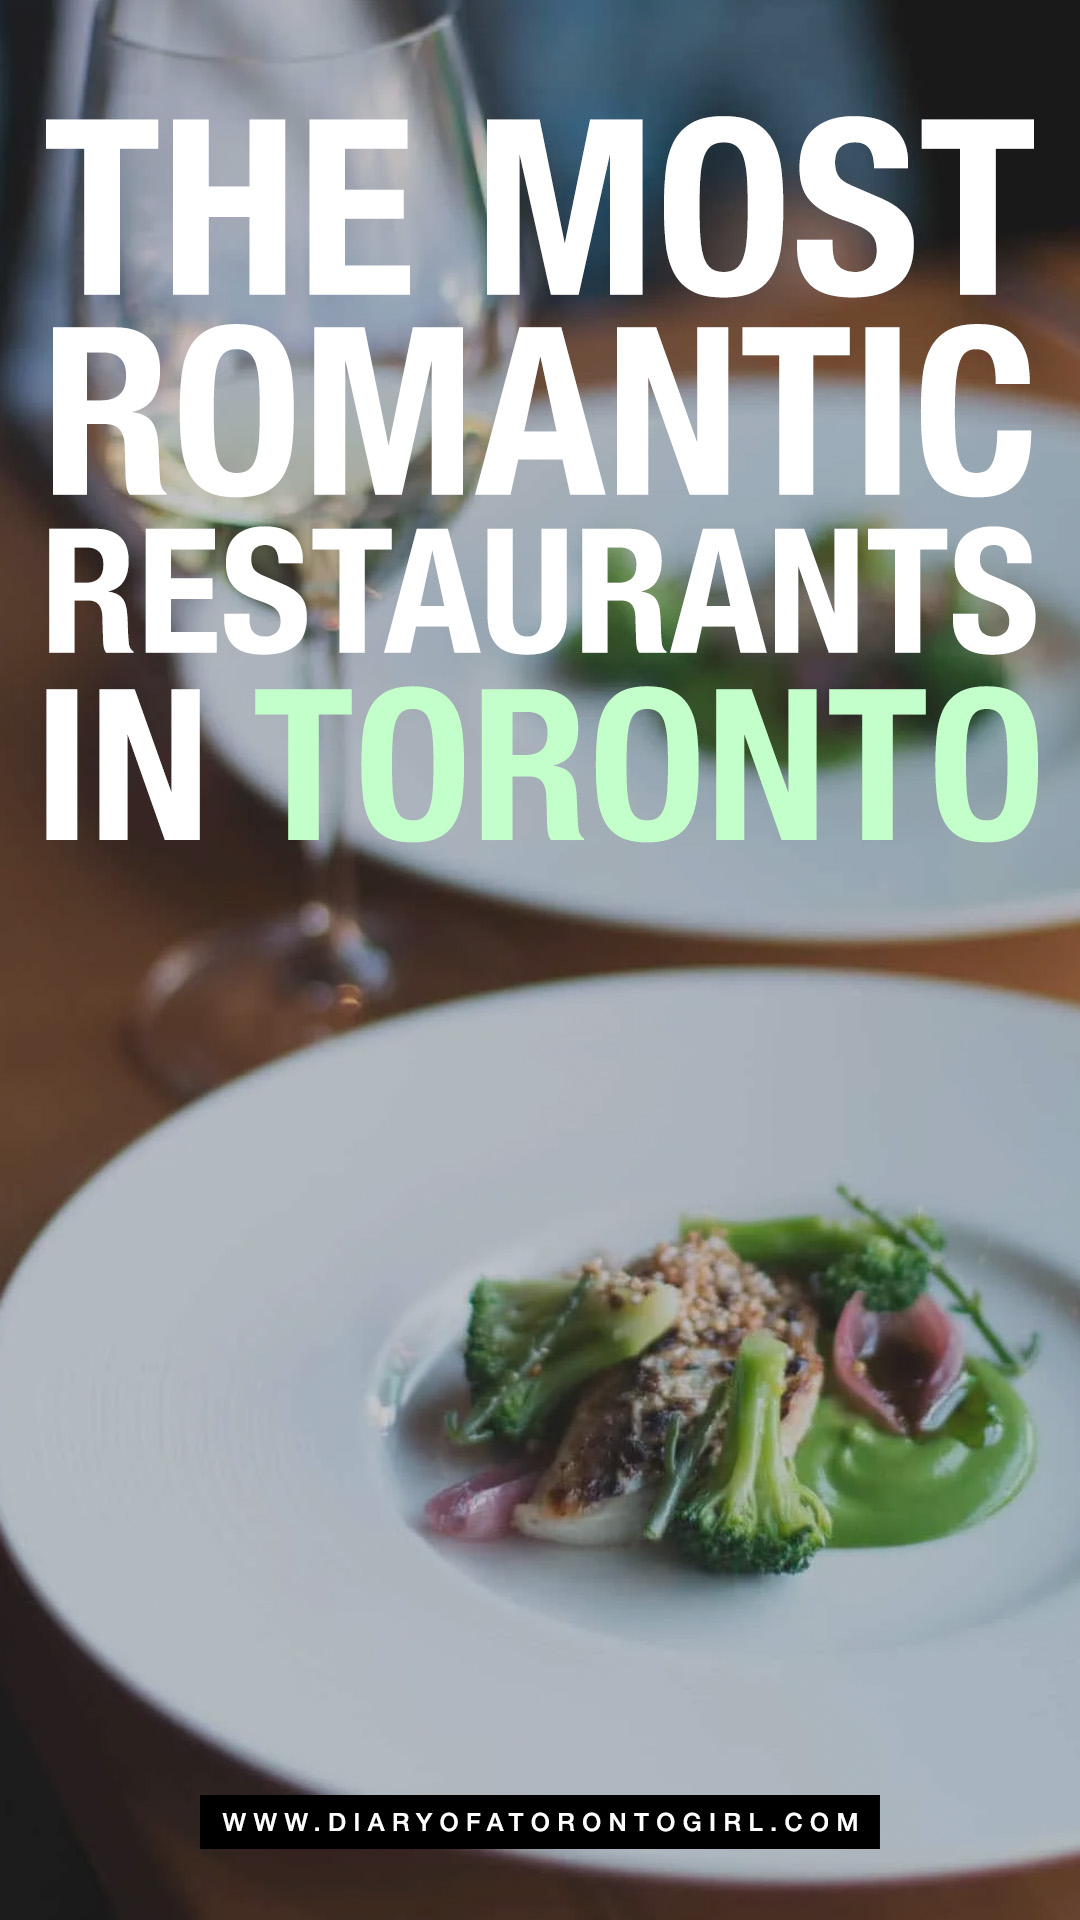 Romantic restaurants in Toronto